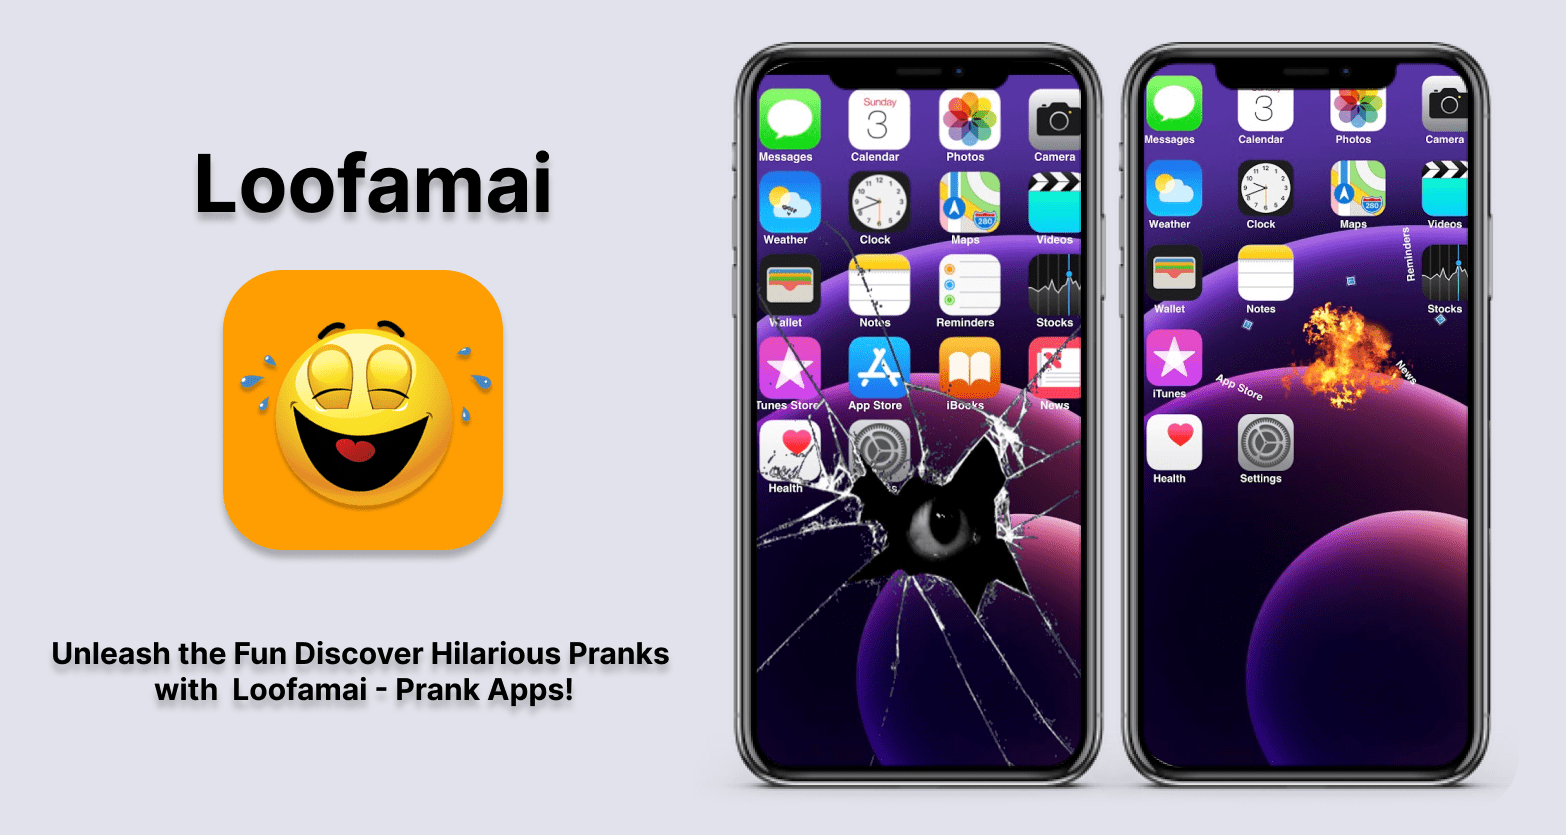 Loofamai - Prank Apps